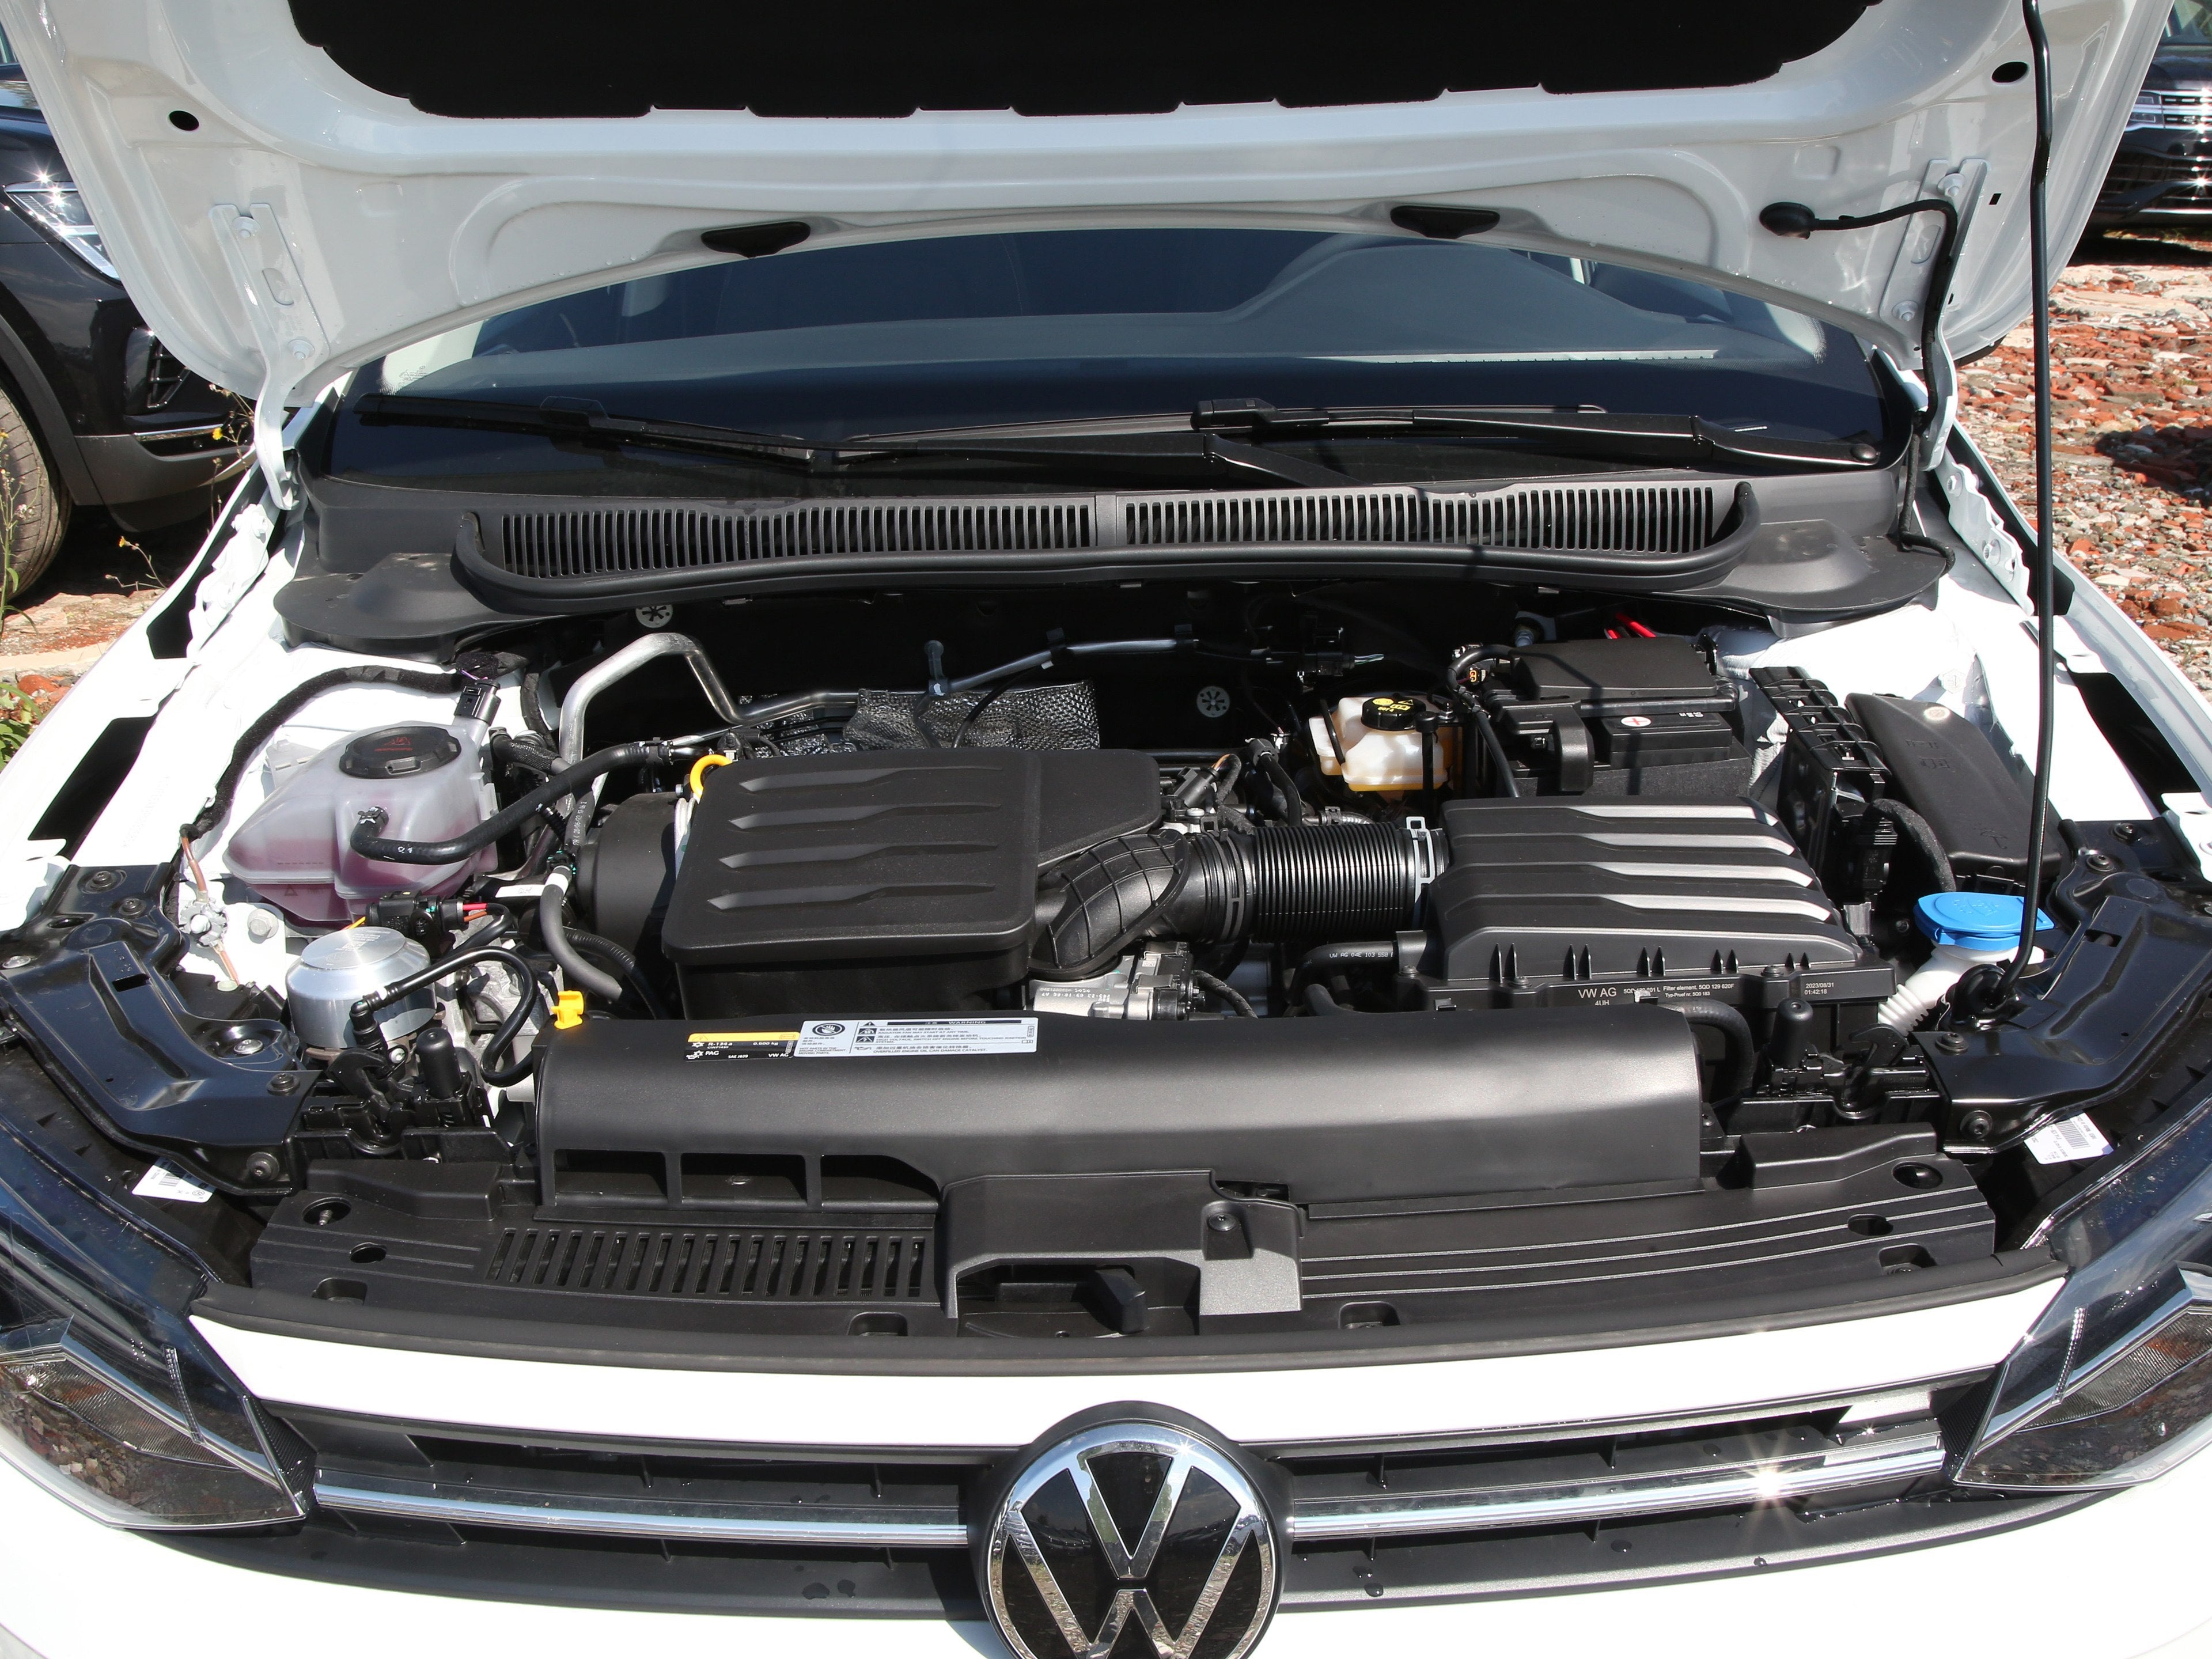 SAIC VW POLO 2023 PLUS 1.5L Fuel Sedan 110hp L4 Gasoline Vehicle Two-box Passenger Car